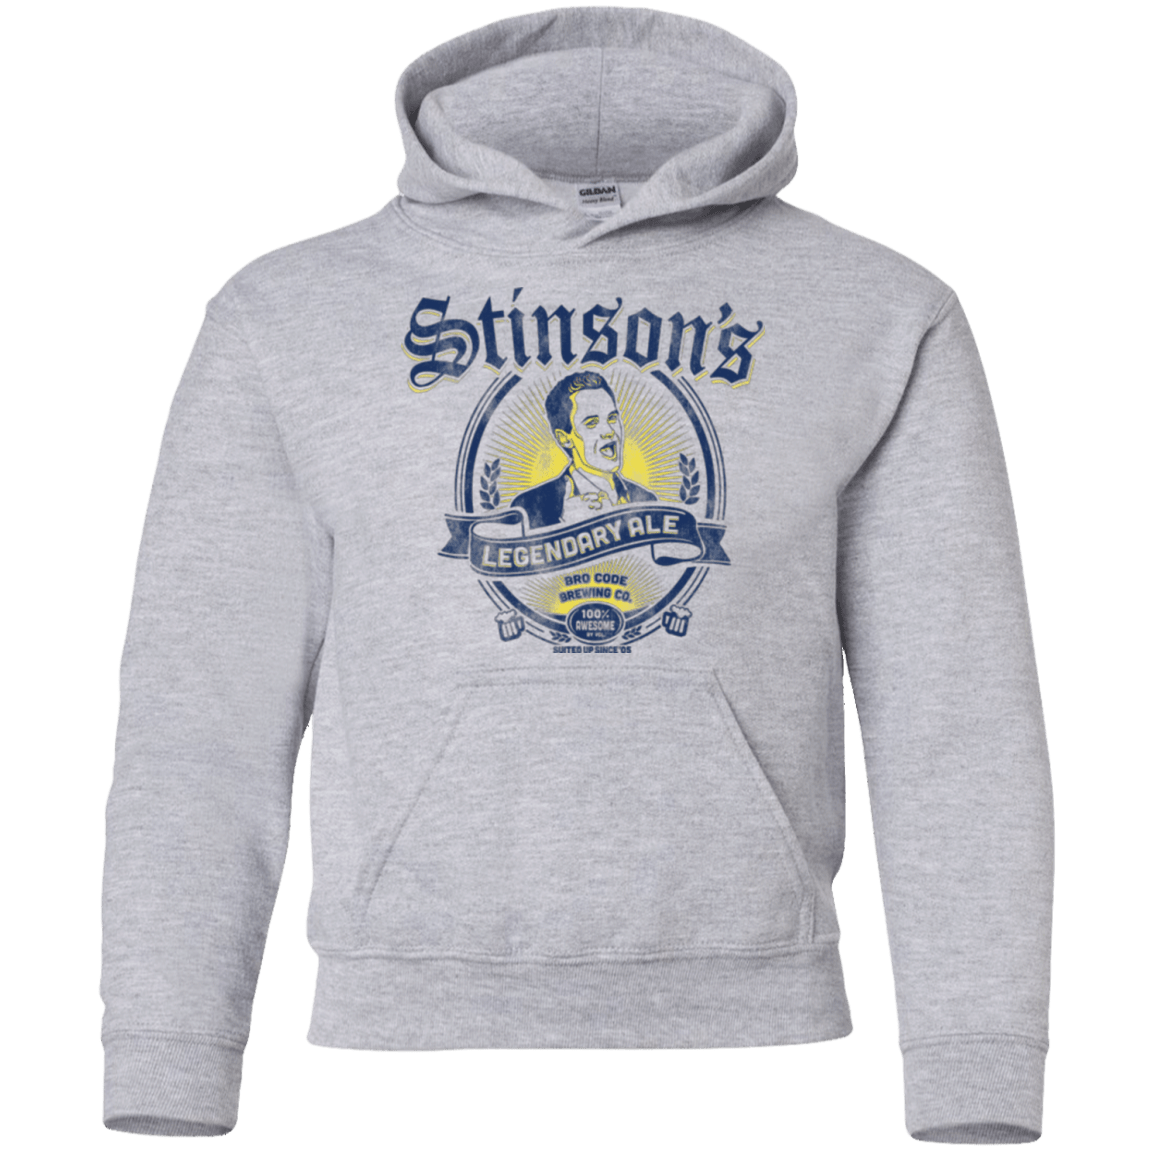 Sweatshirts Sport Grey / YS Stinsons Legendary Ale Youth Hoodie